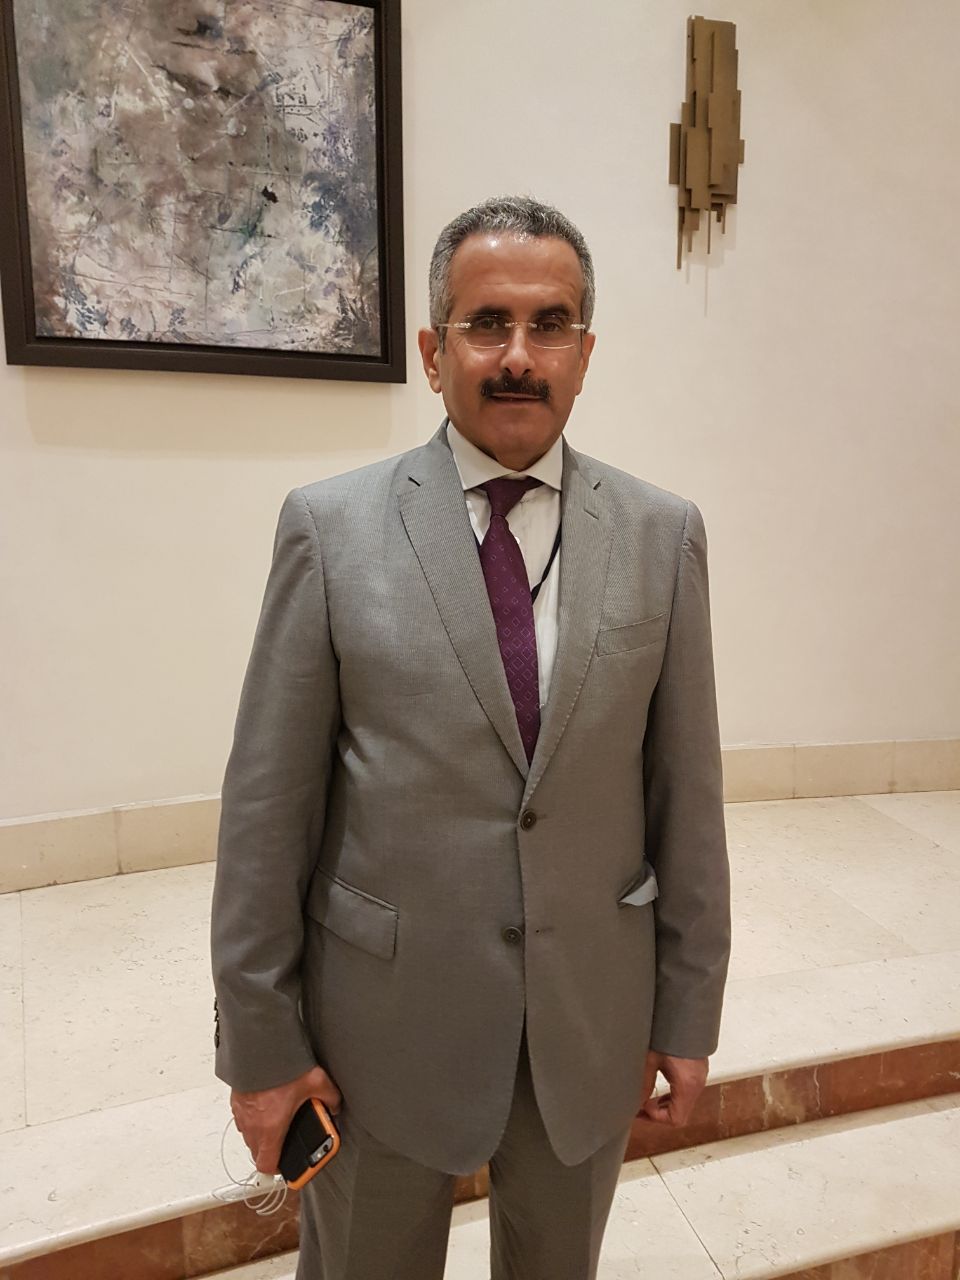 President of Federation of Arab News Agencies (FANA), Chairman of the Board, and Director General of Kuwait News Agency (KUNA) Sheikh Mubarak Al-Duaij Al-Ibrahim Al-Sabah